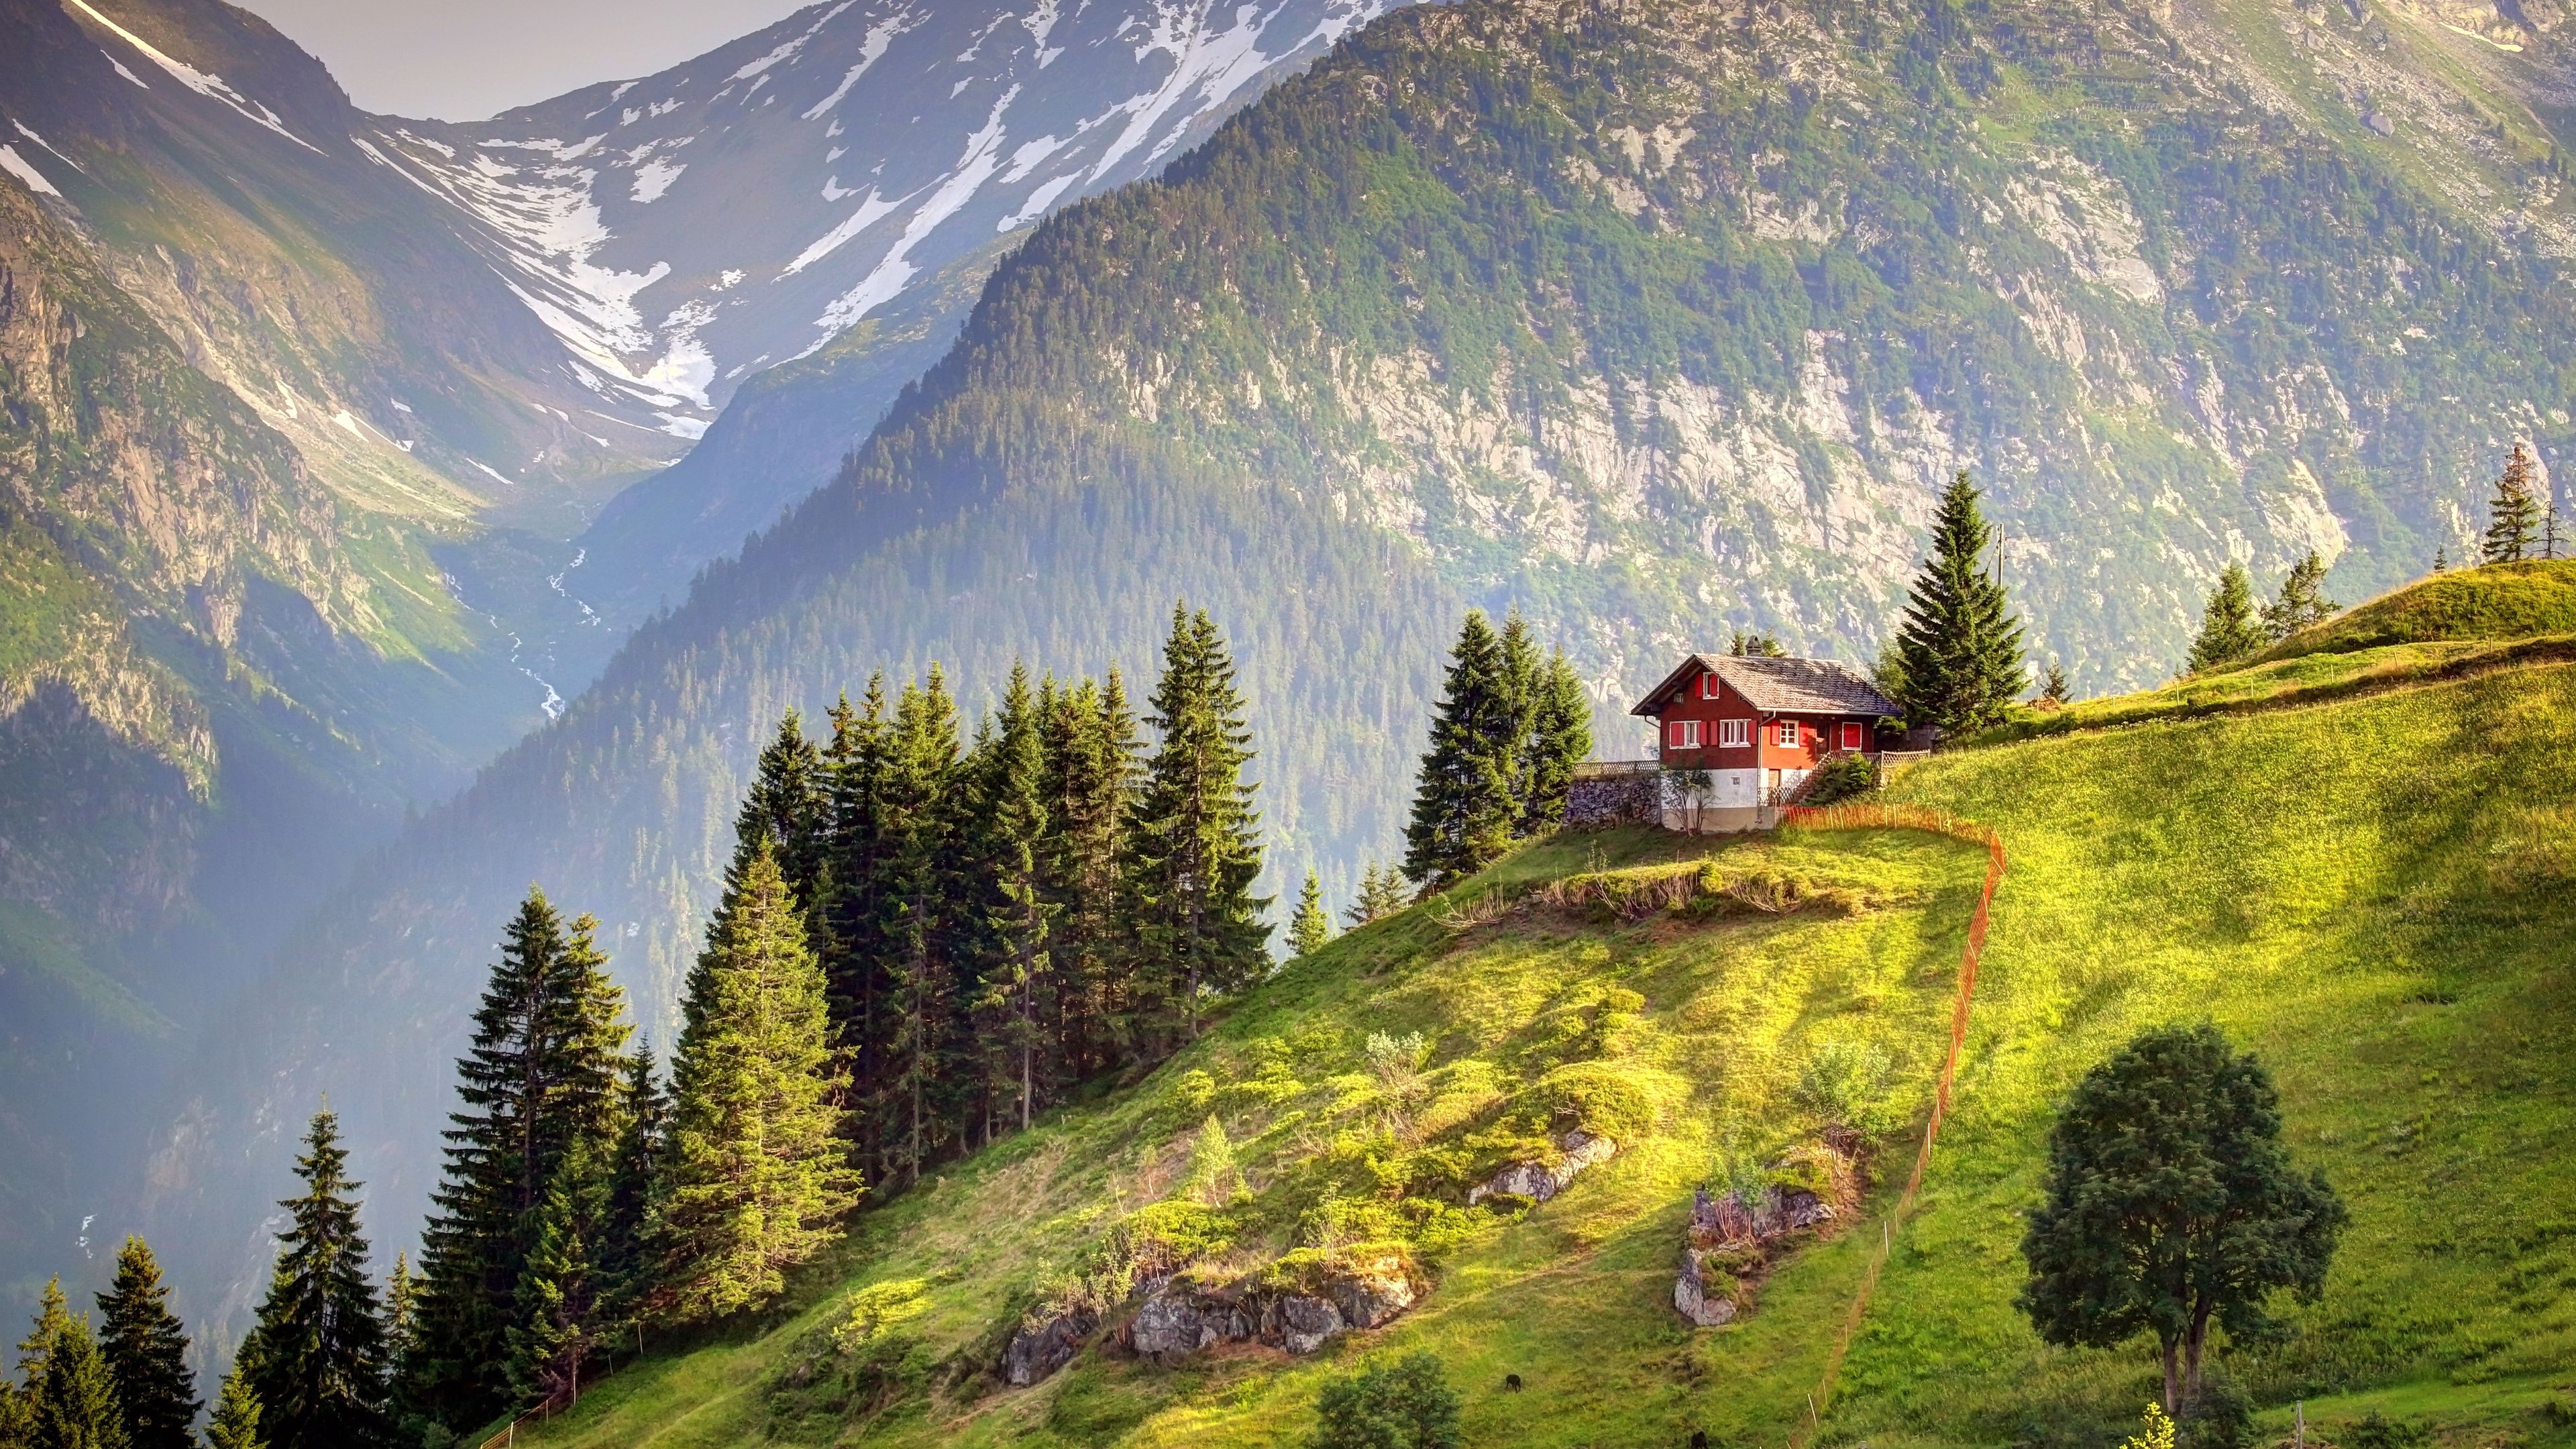 Excellent Switzerland Wallpaper. Landscape wallpaper, Switzerland wallpaper, Mountain wallpaper